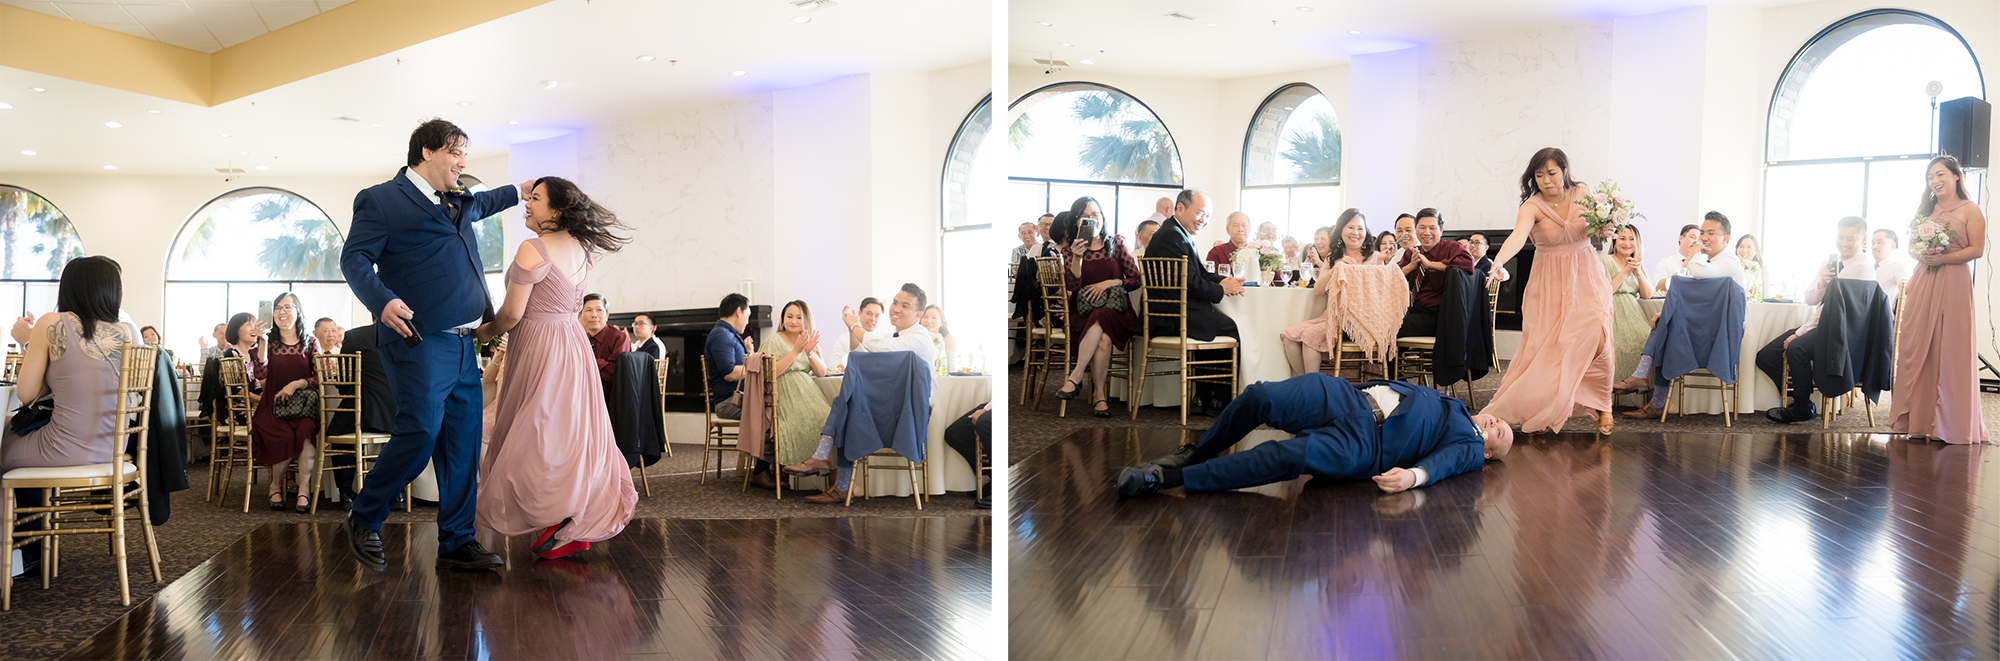 26-FH-Pasadena-City-Hall-Sierra-La-Verne-Wedgewood-Wedding-Photos-Andrew-Kwak-Photography.png